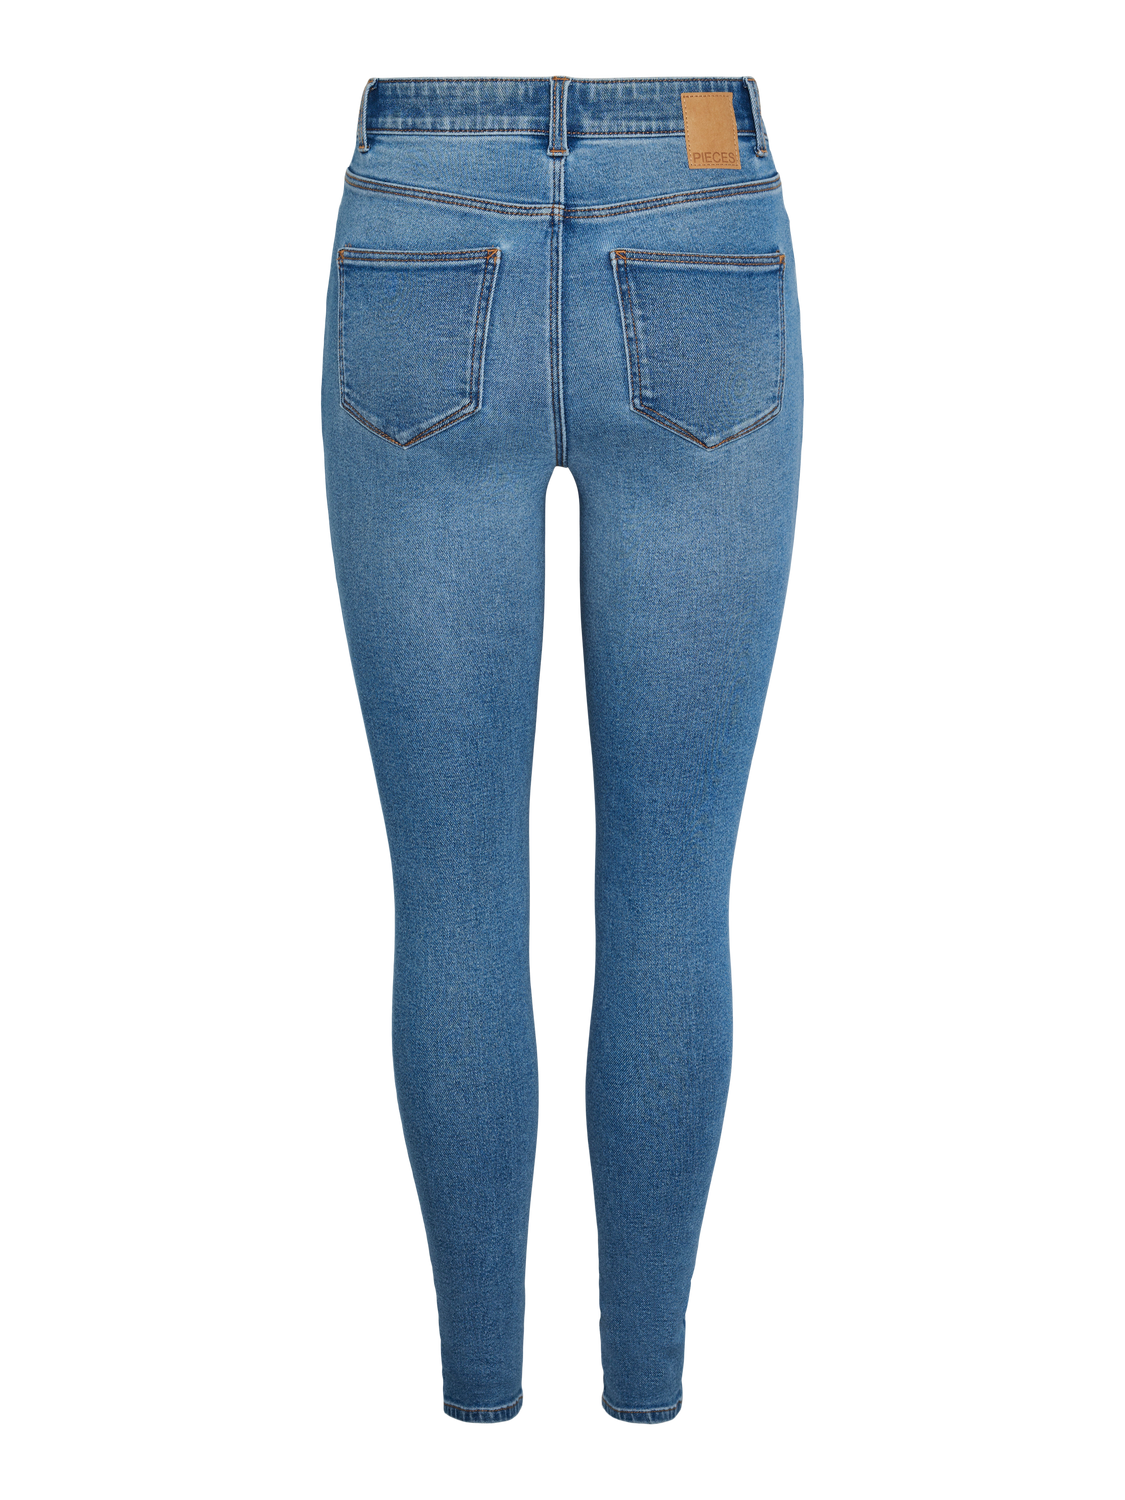 PCDANA HW Jeans - Medium Blue Denim